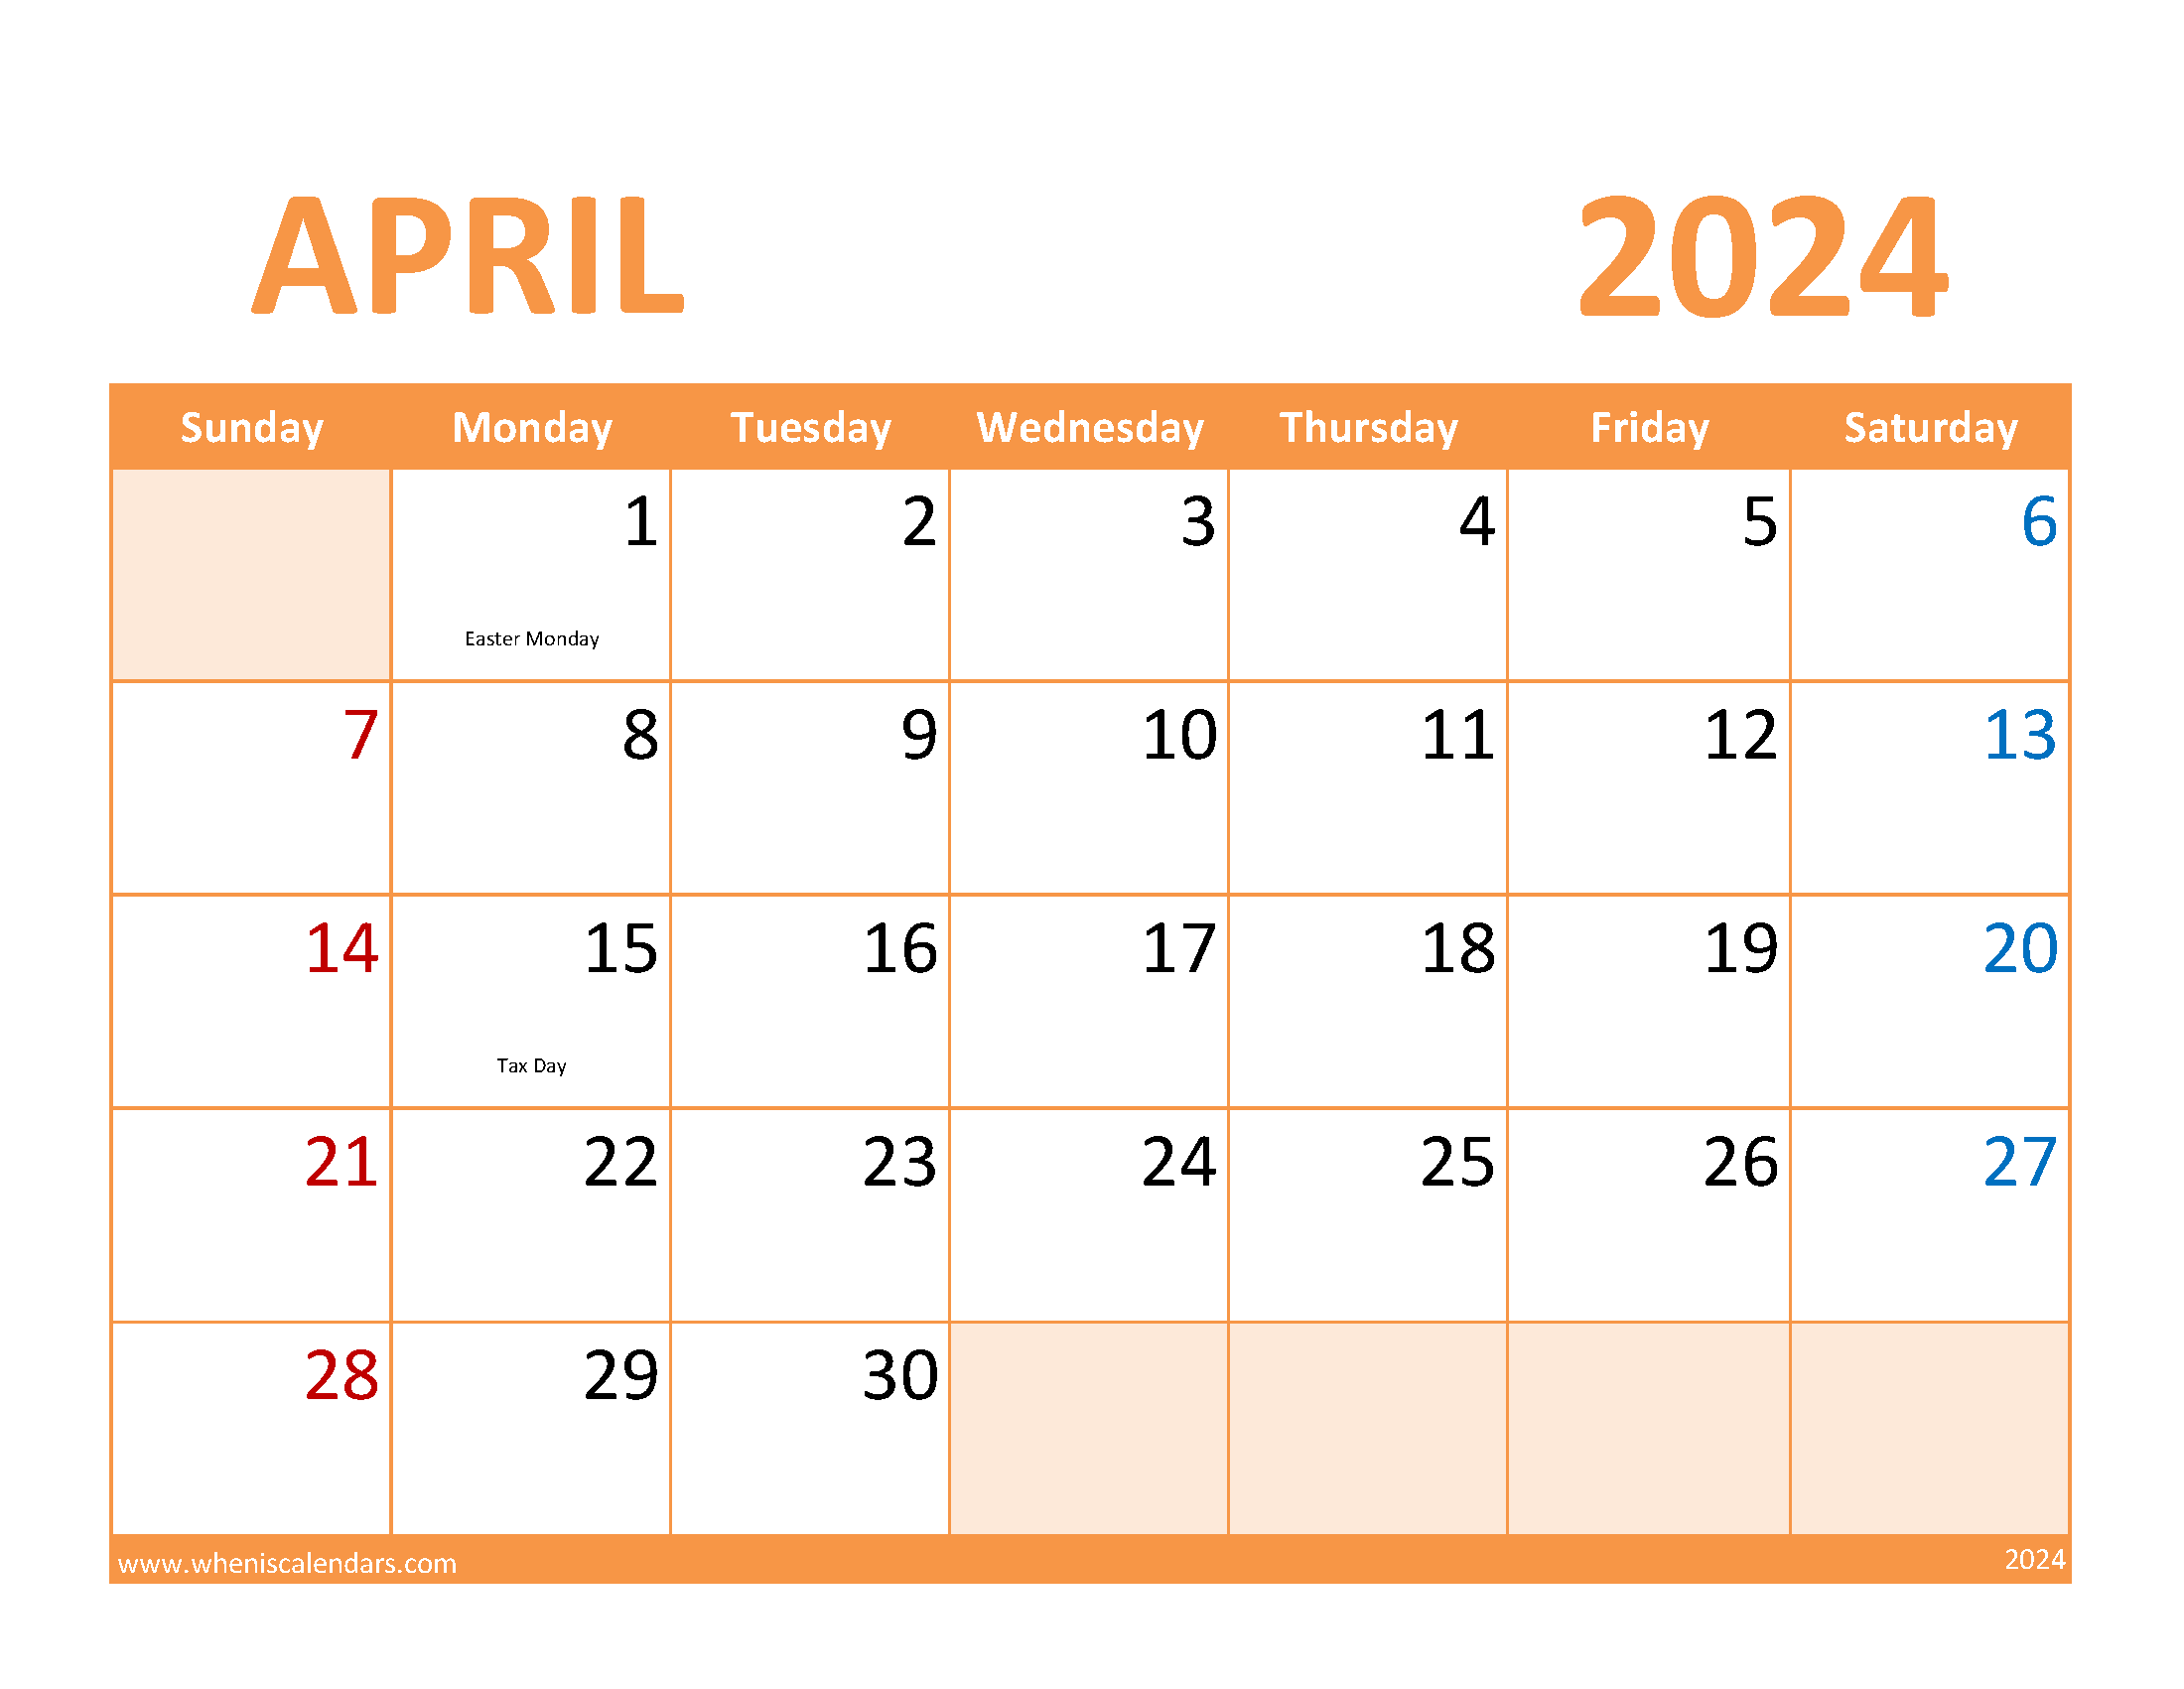 Download Your Free April 2024 Calendar Now!